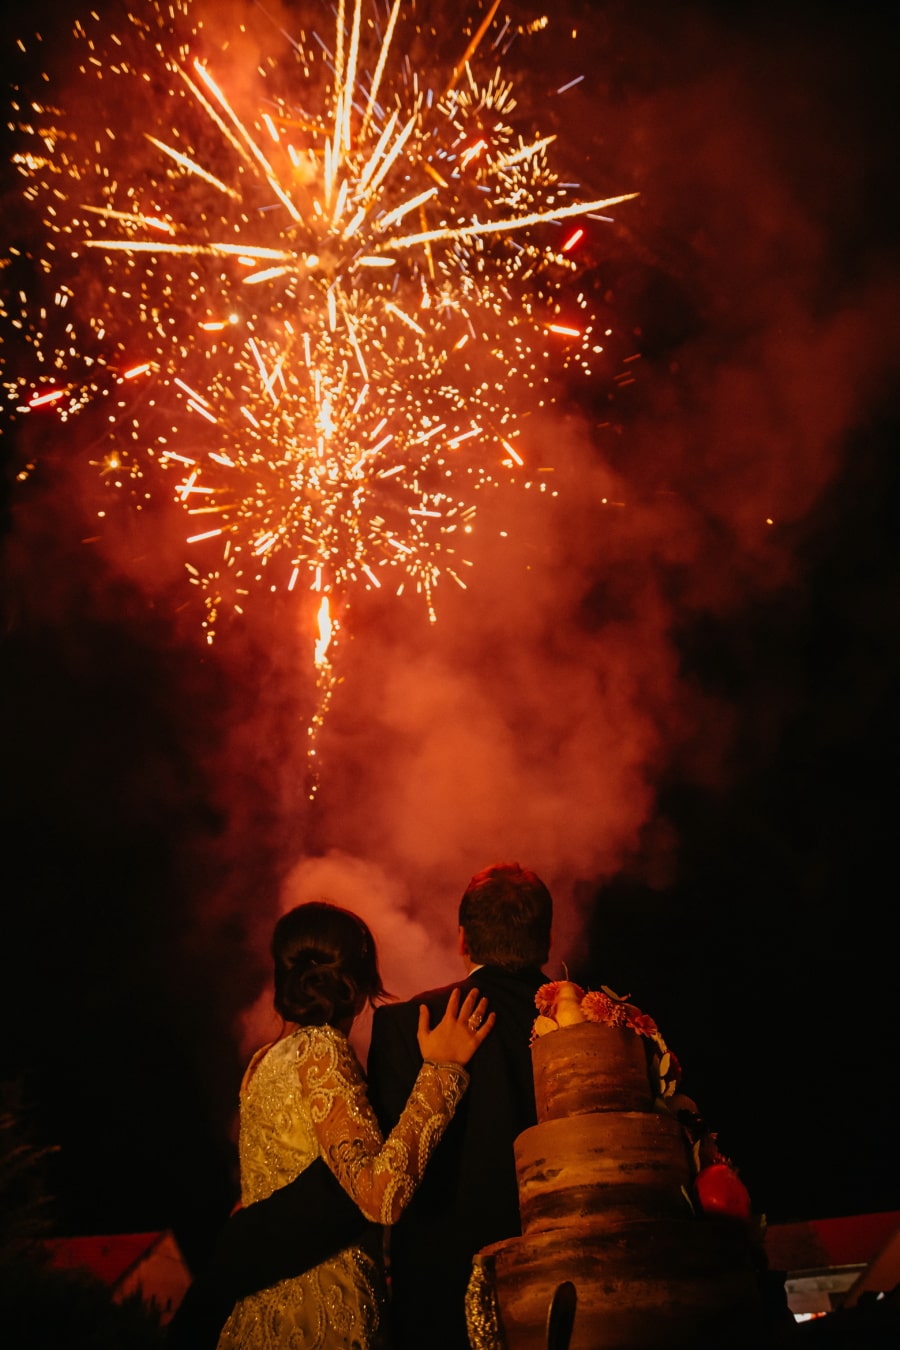 romantische, vuurwerk, vriendje, vriendin, knuffelen, Festival, viering, rook, kaars, explosie